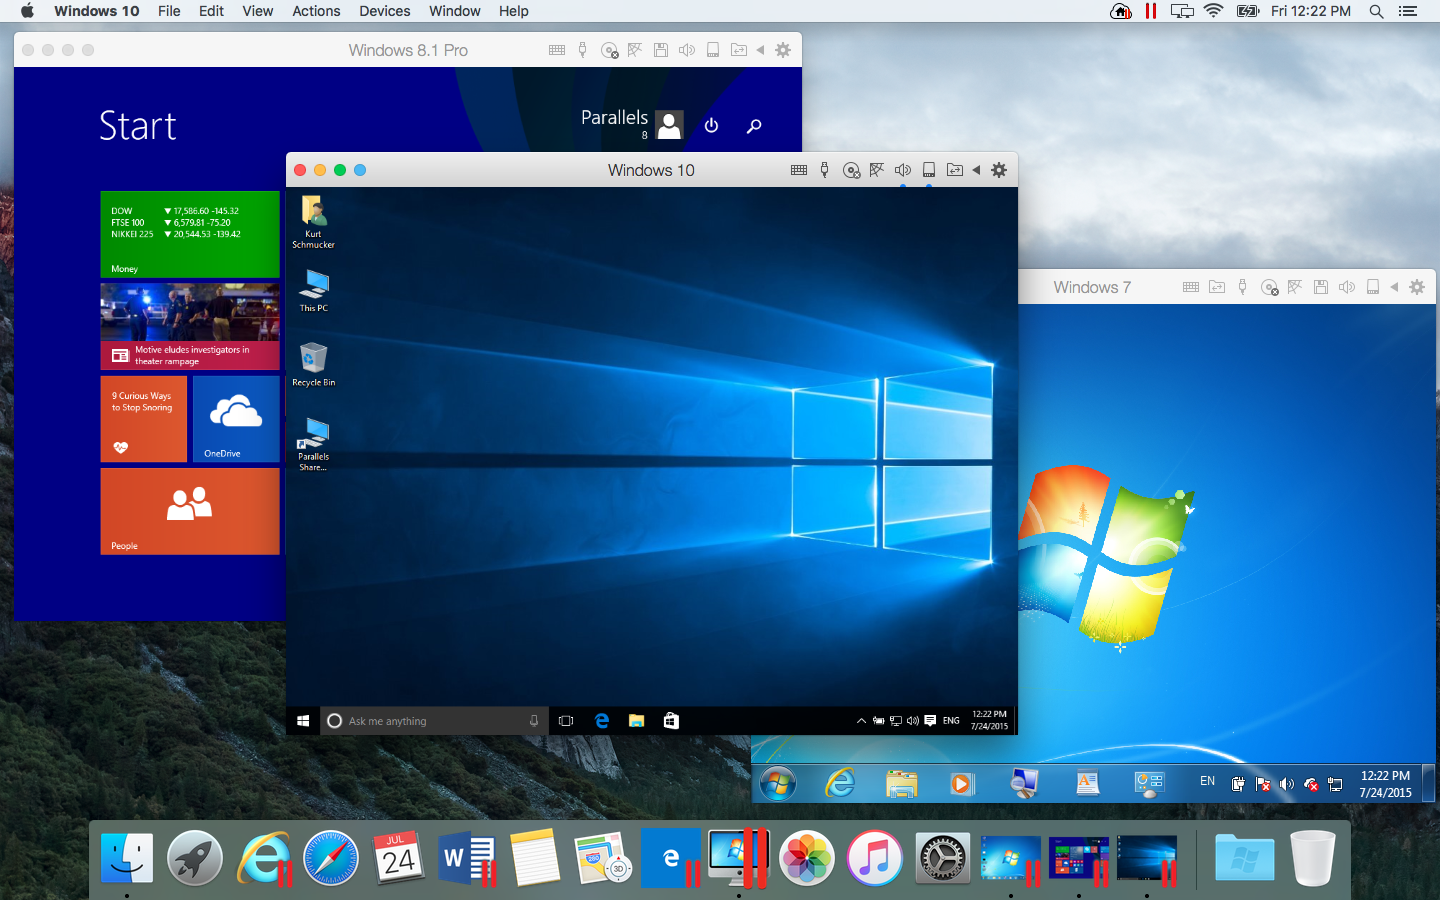 Parallels Desktop For Mac 11 Torrent